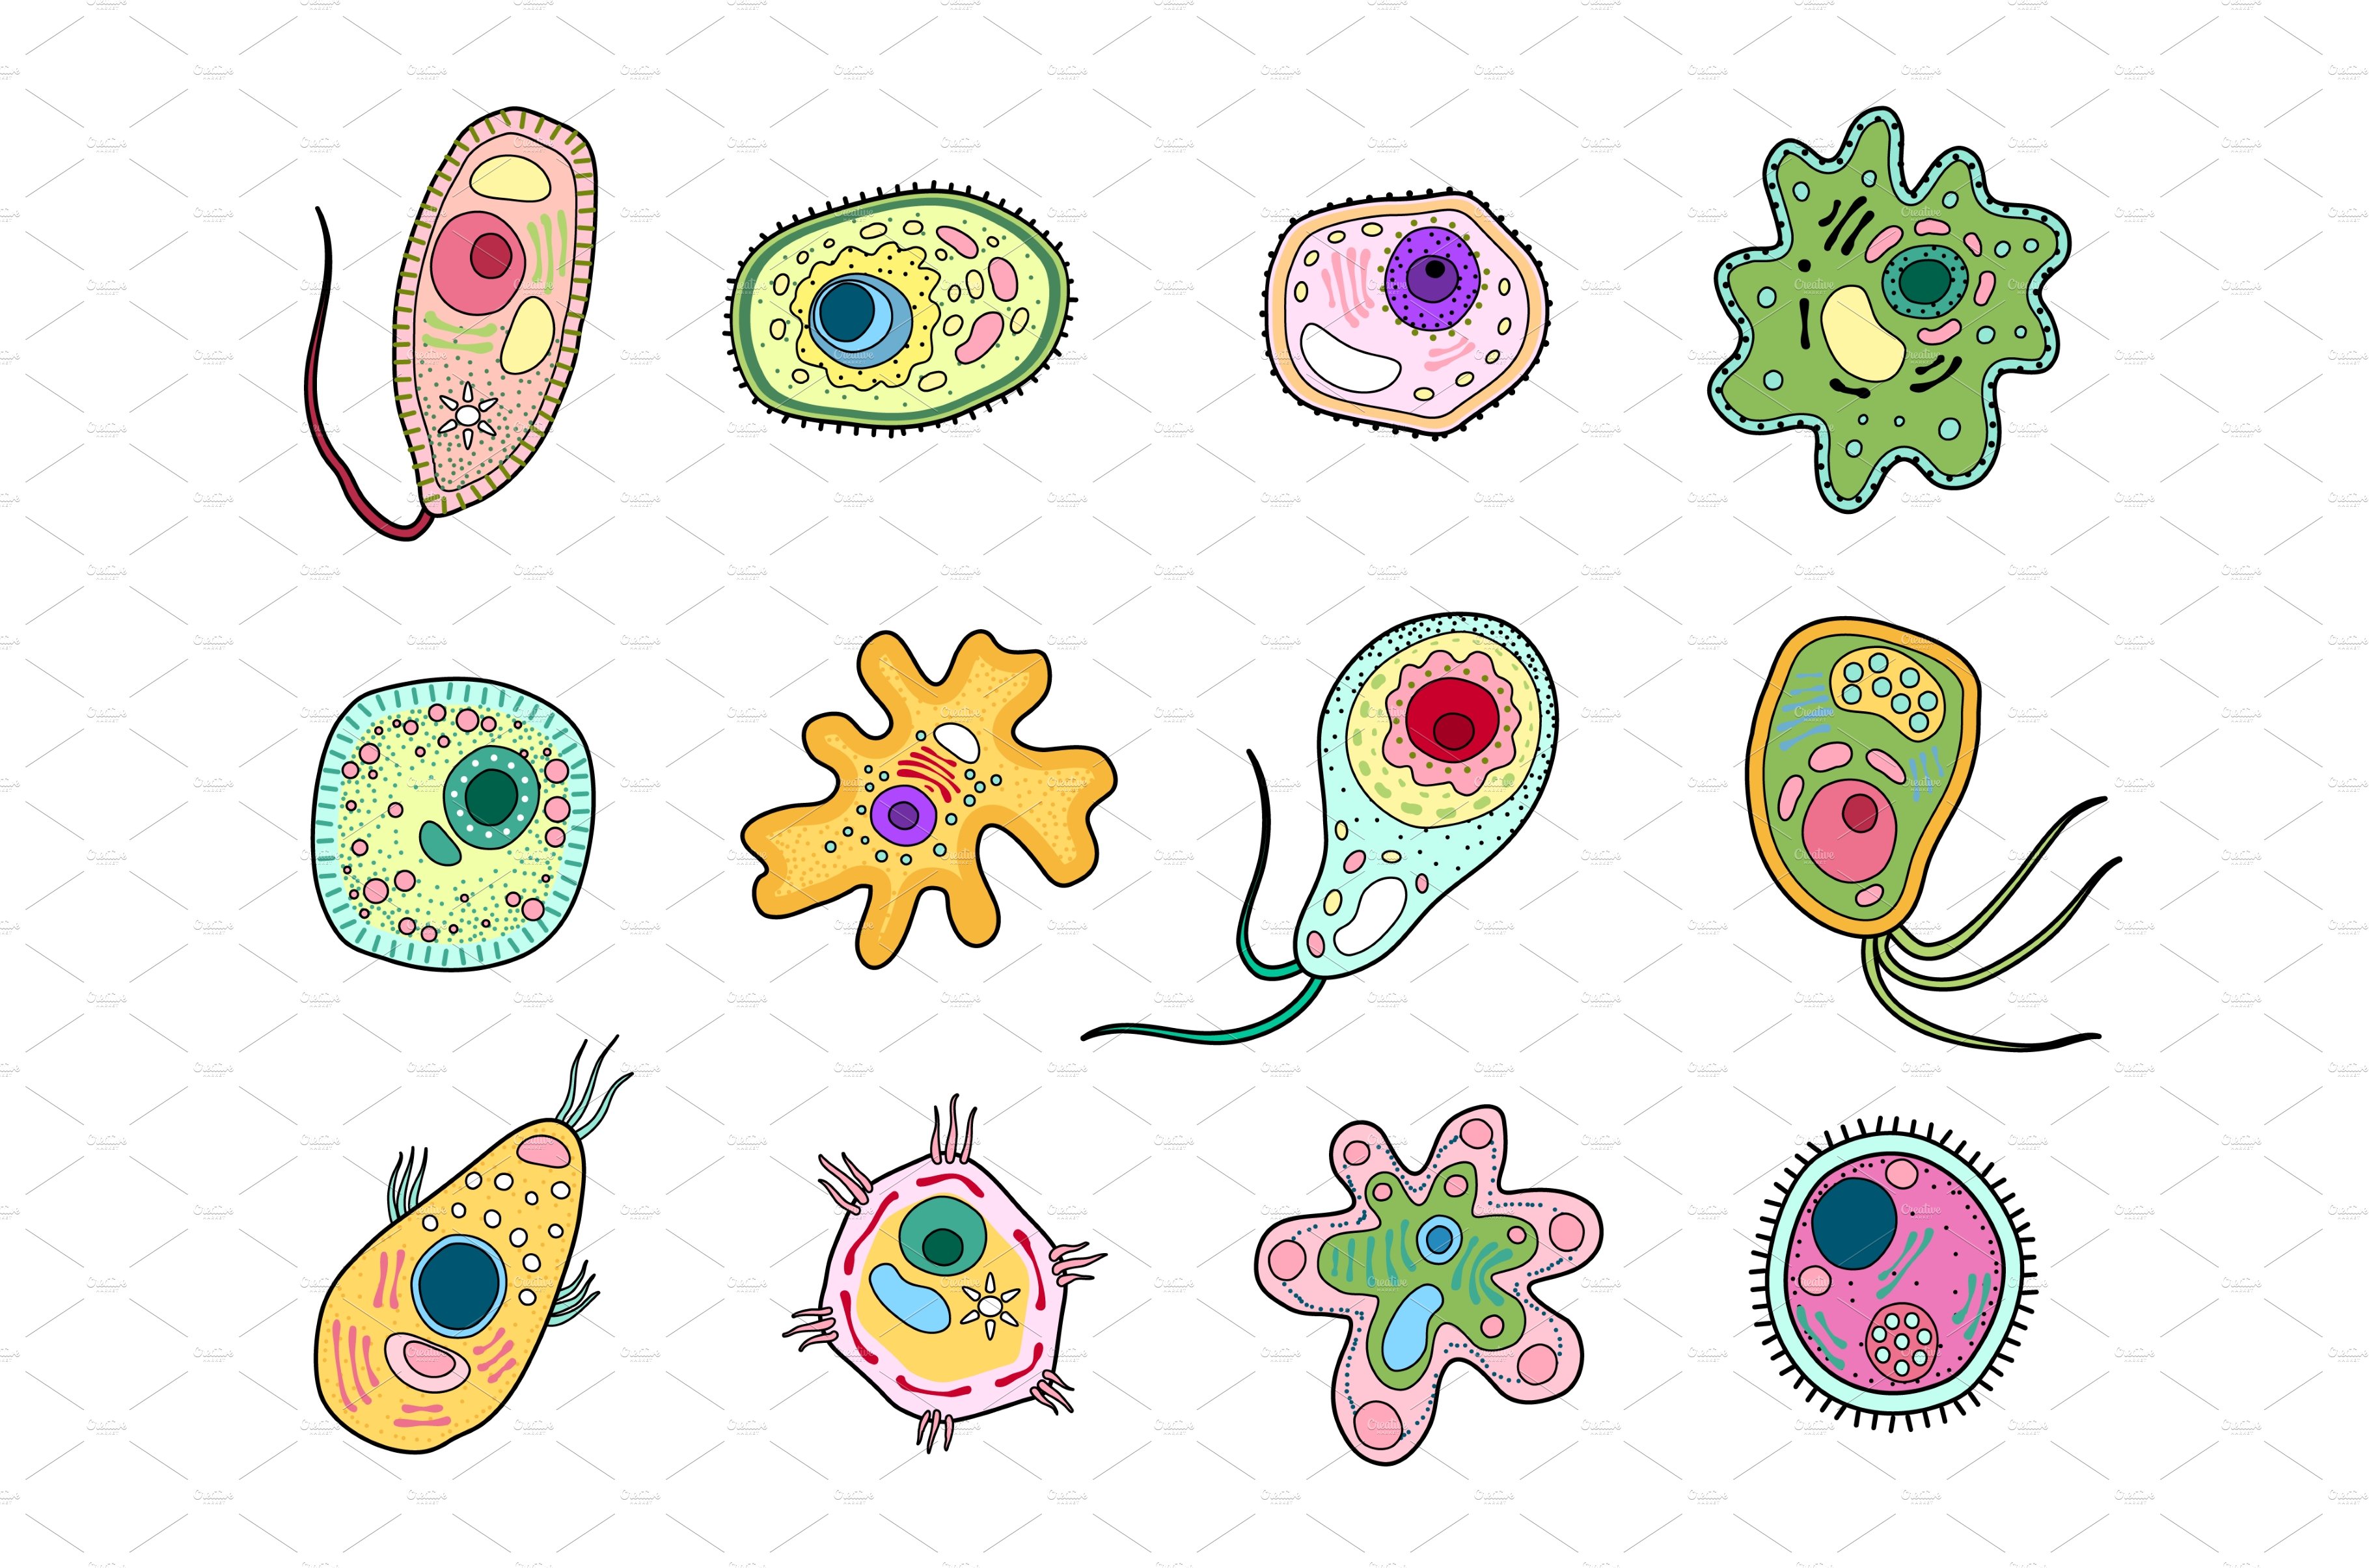 Protista, protozoa or amoeba cells cover image.